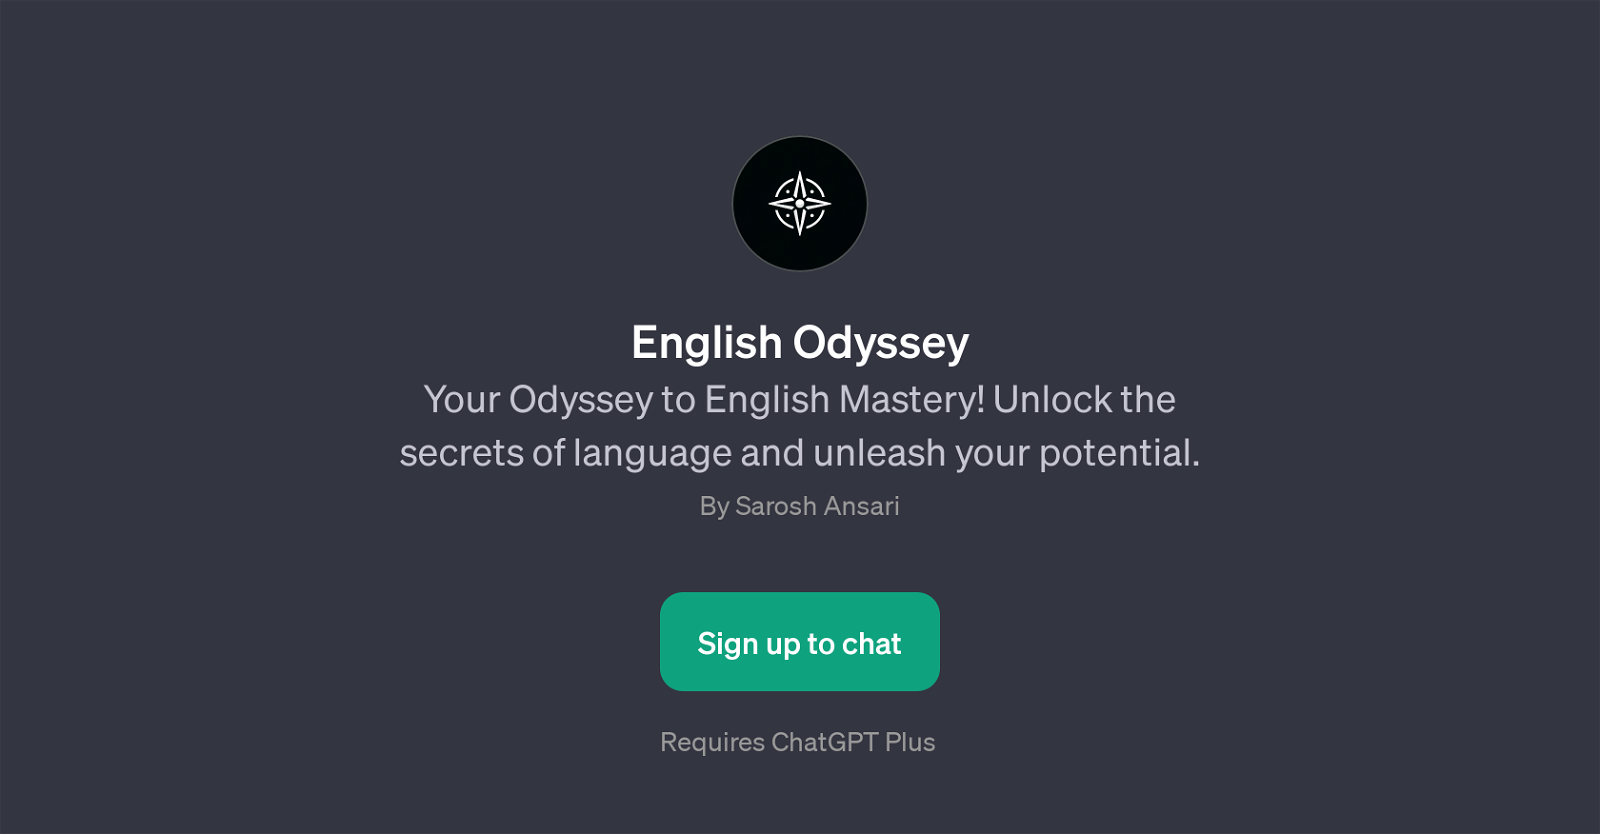 English Odyssey website